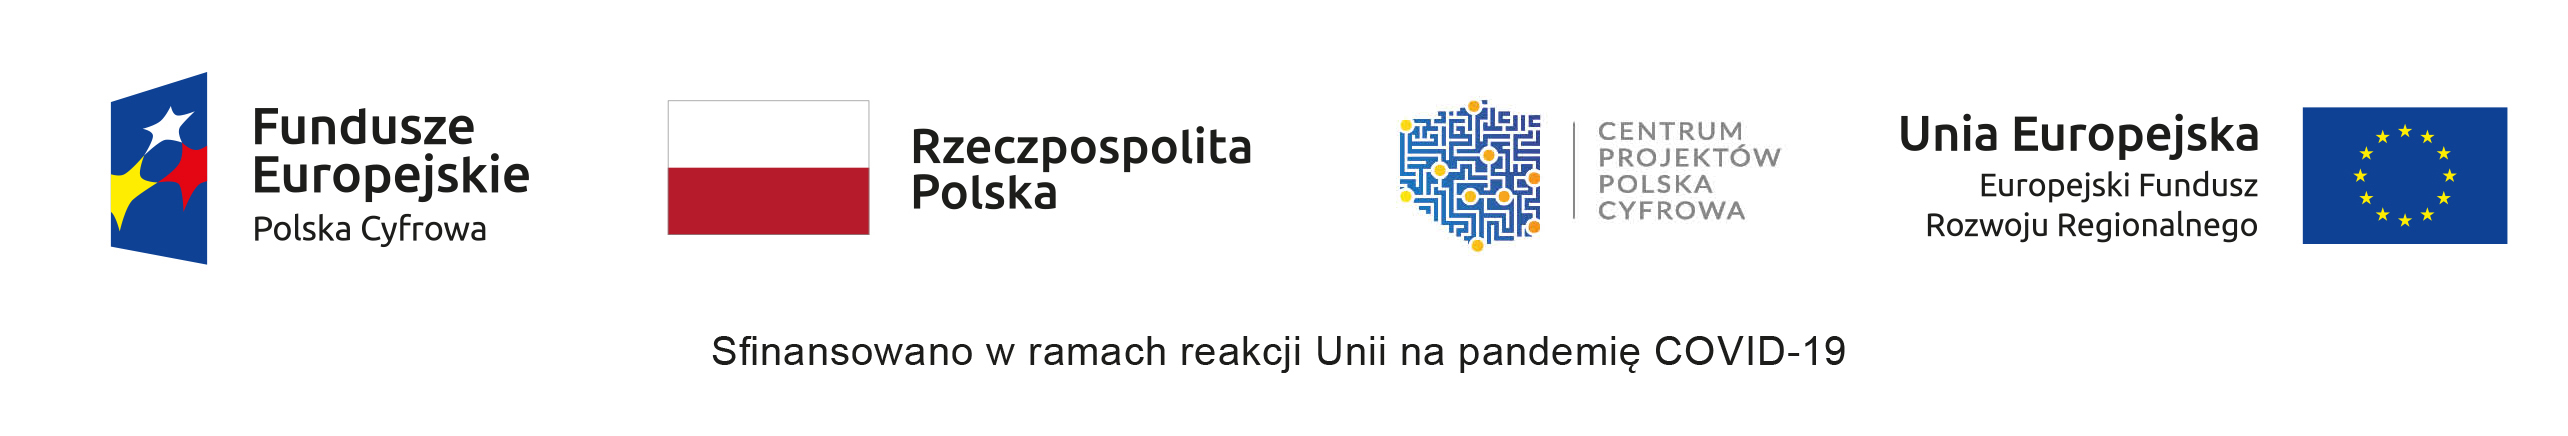 logotypy programu cyfrowa polska